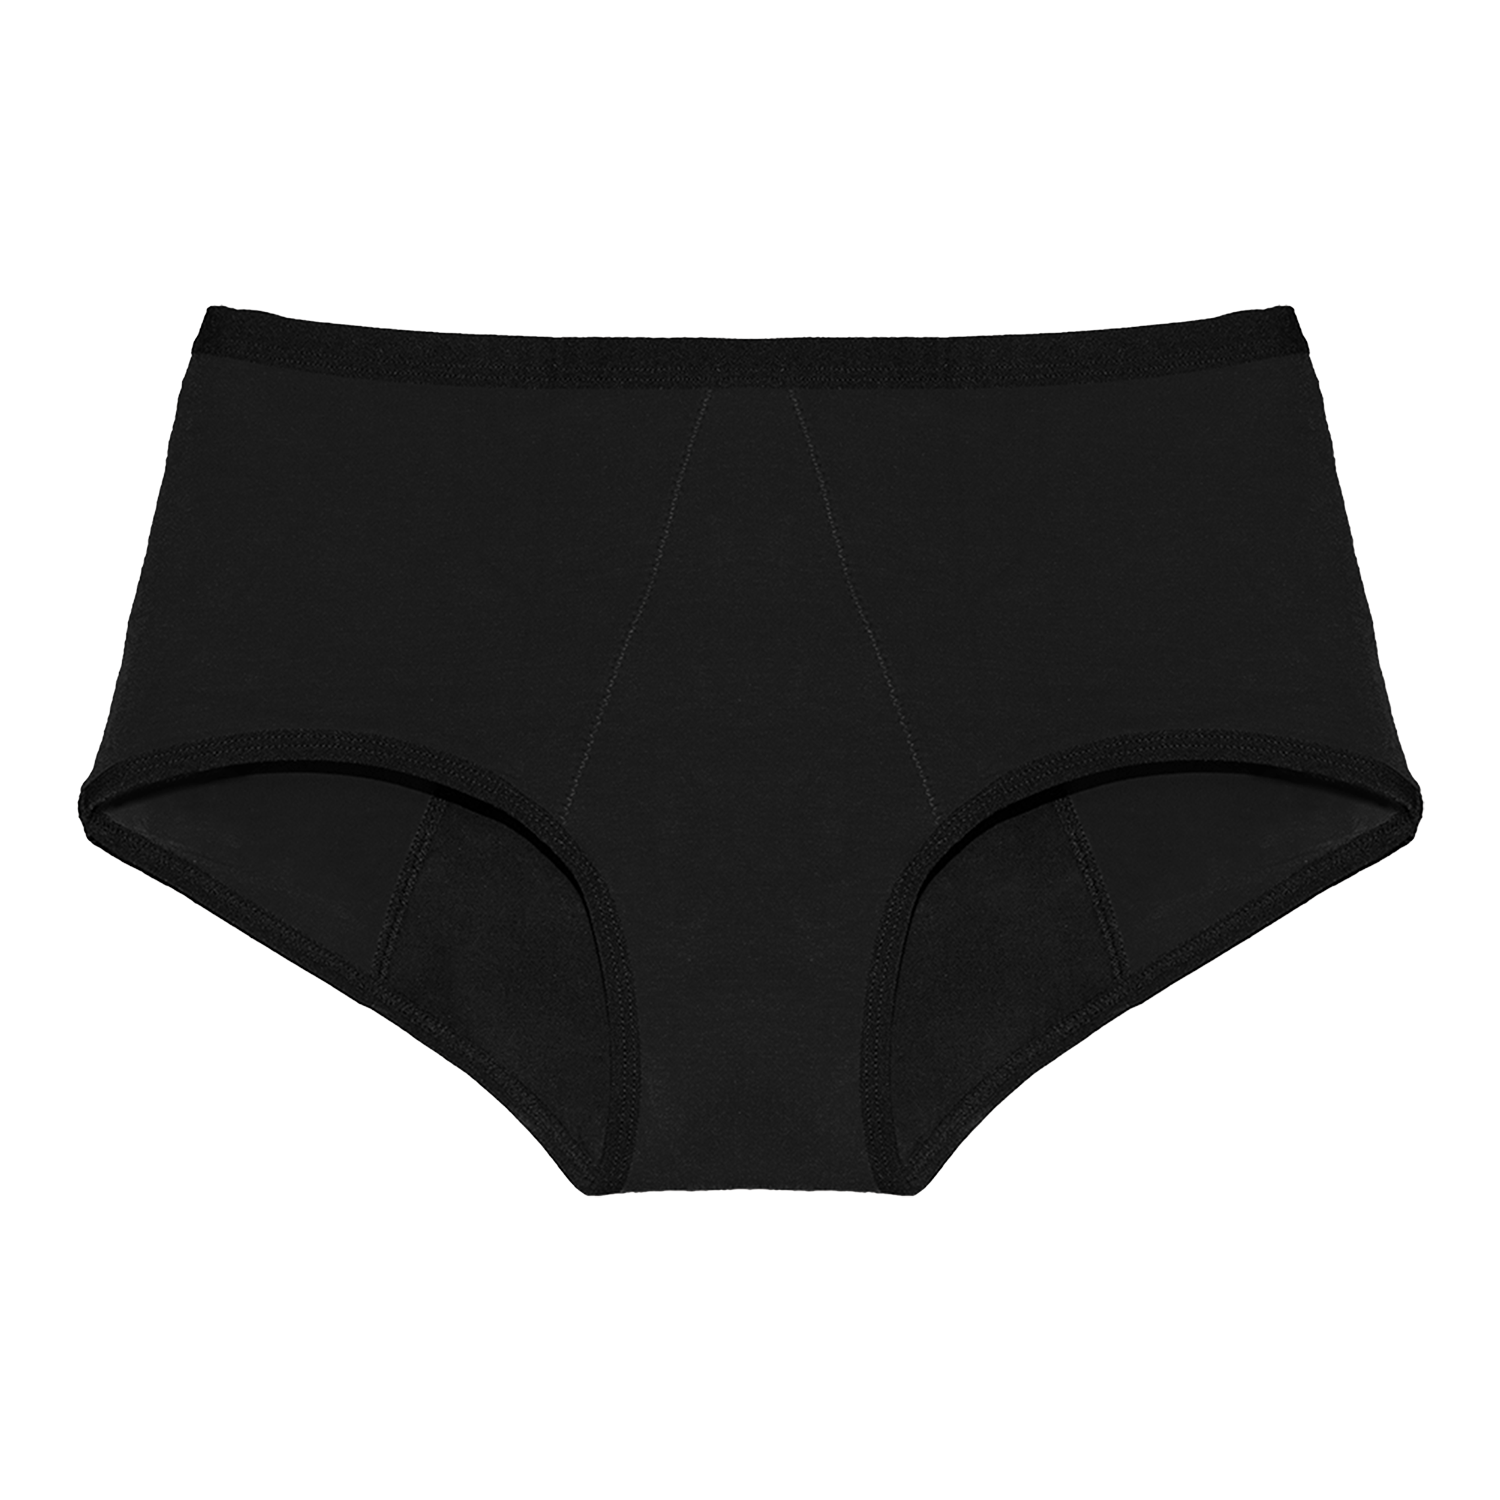 go pad free period underwear black color photo